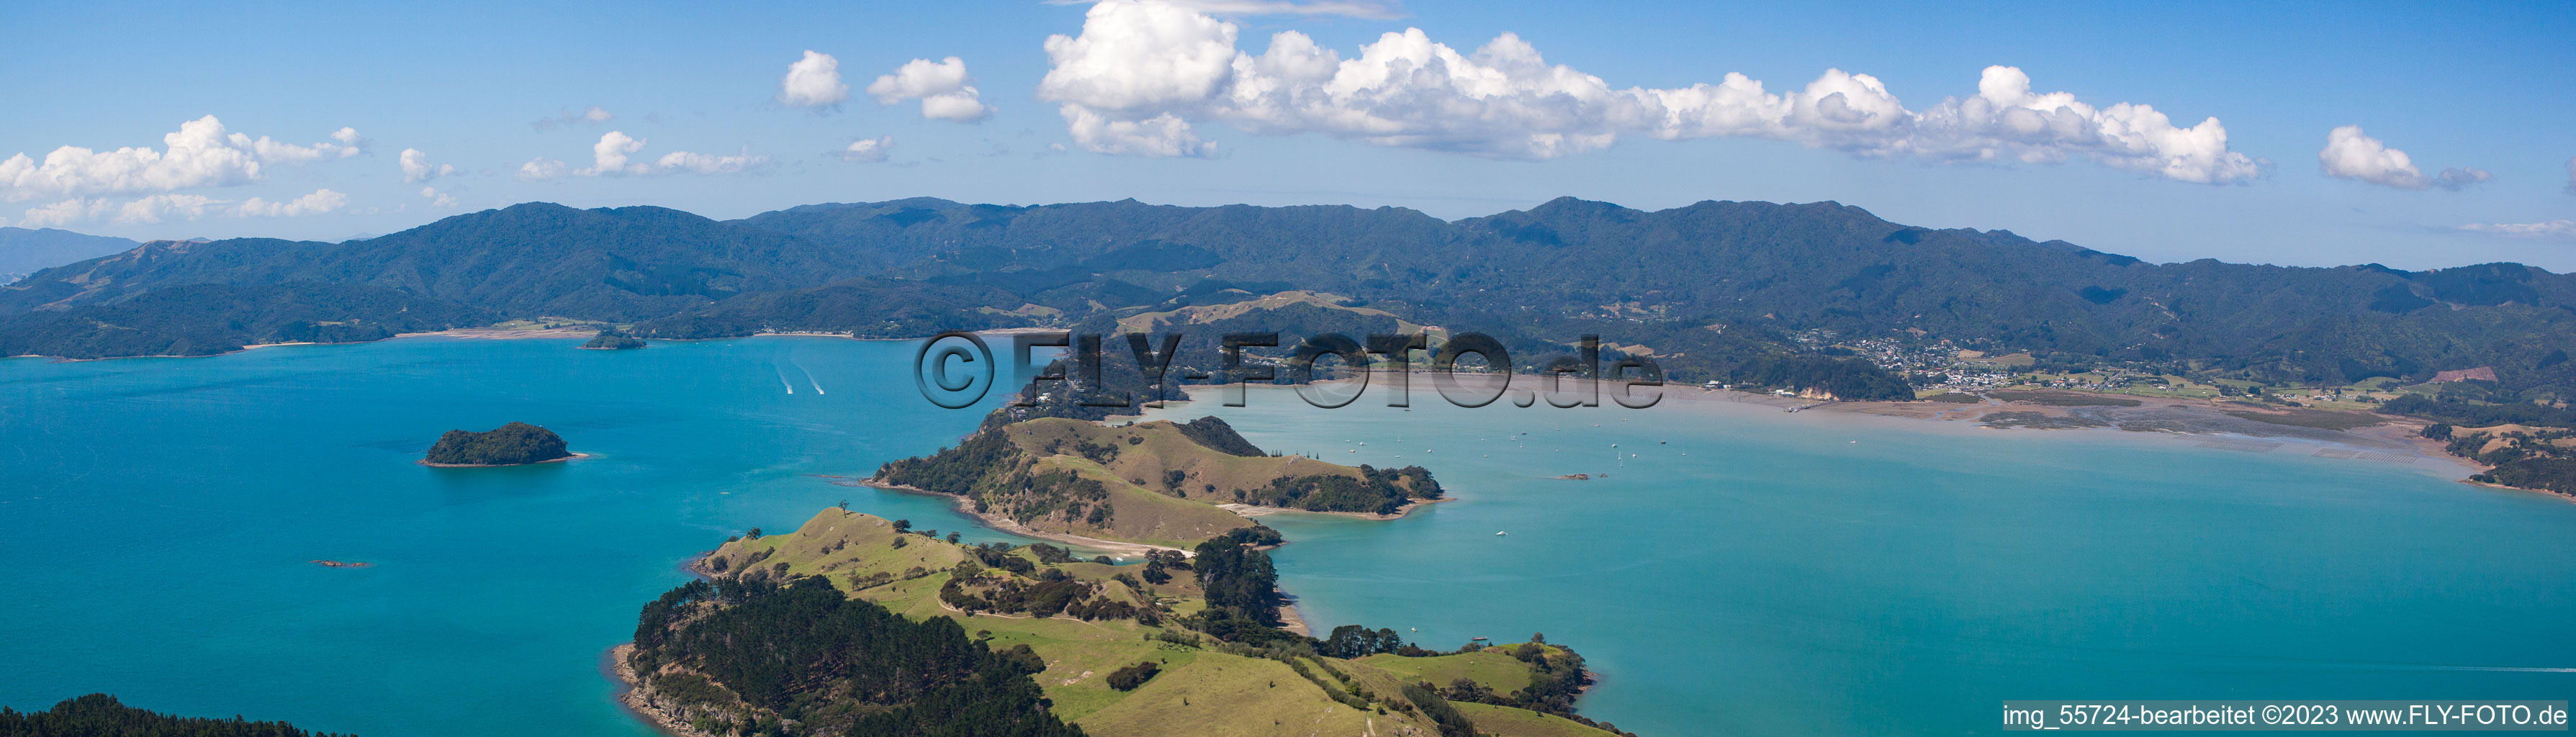 Luftbild von Panorama in Coromandel im Bundesland Waikato, Neuseeland